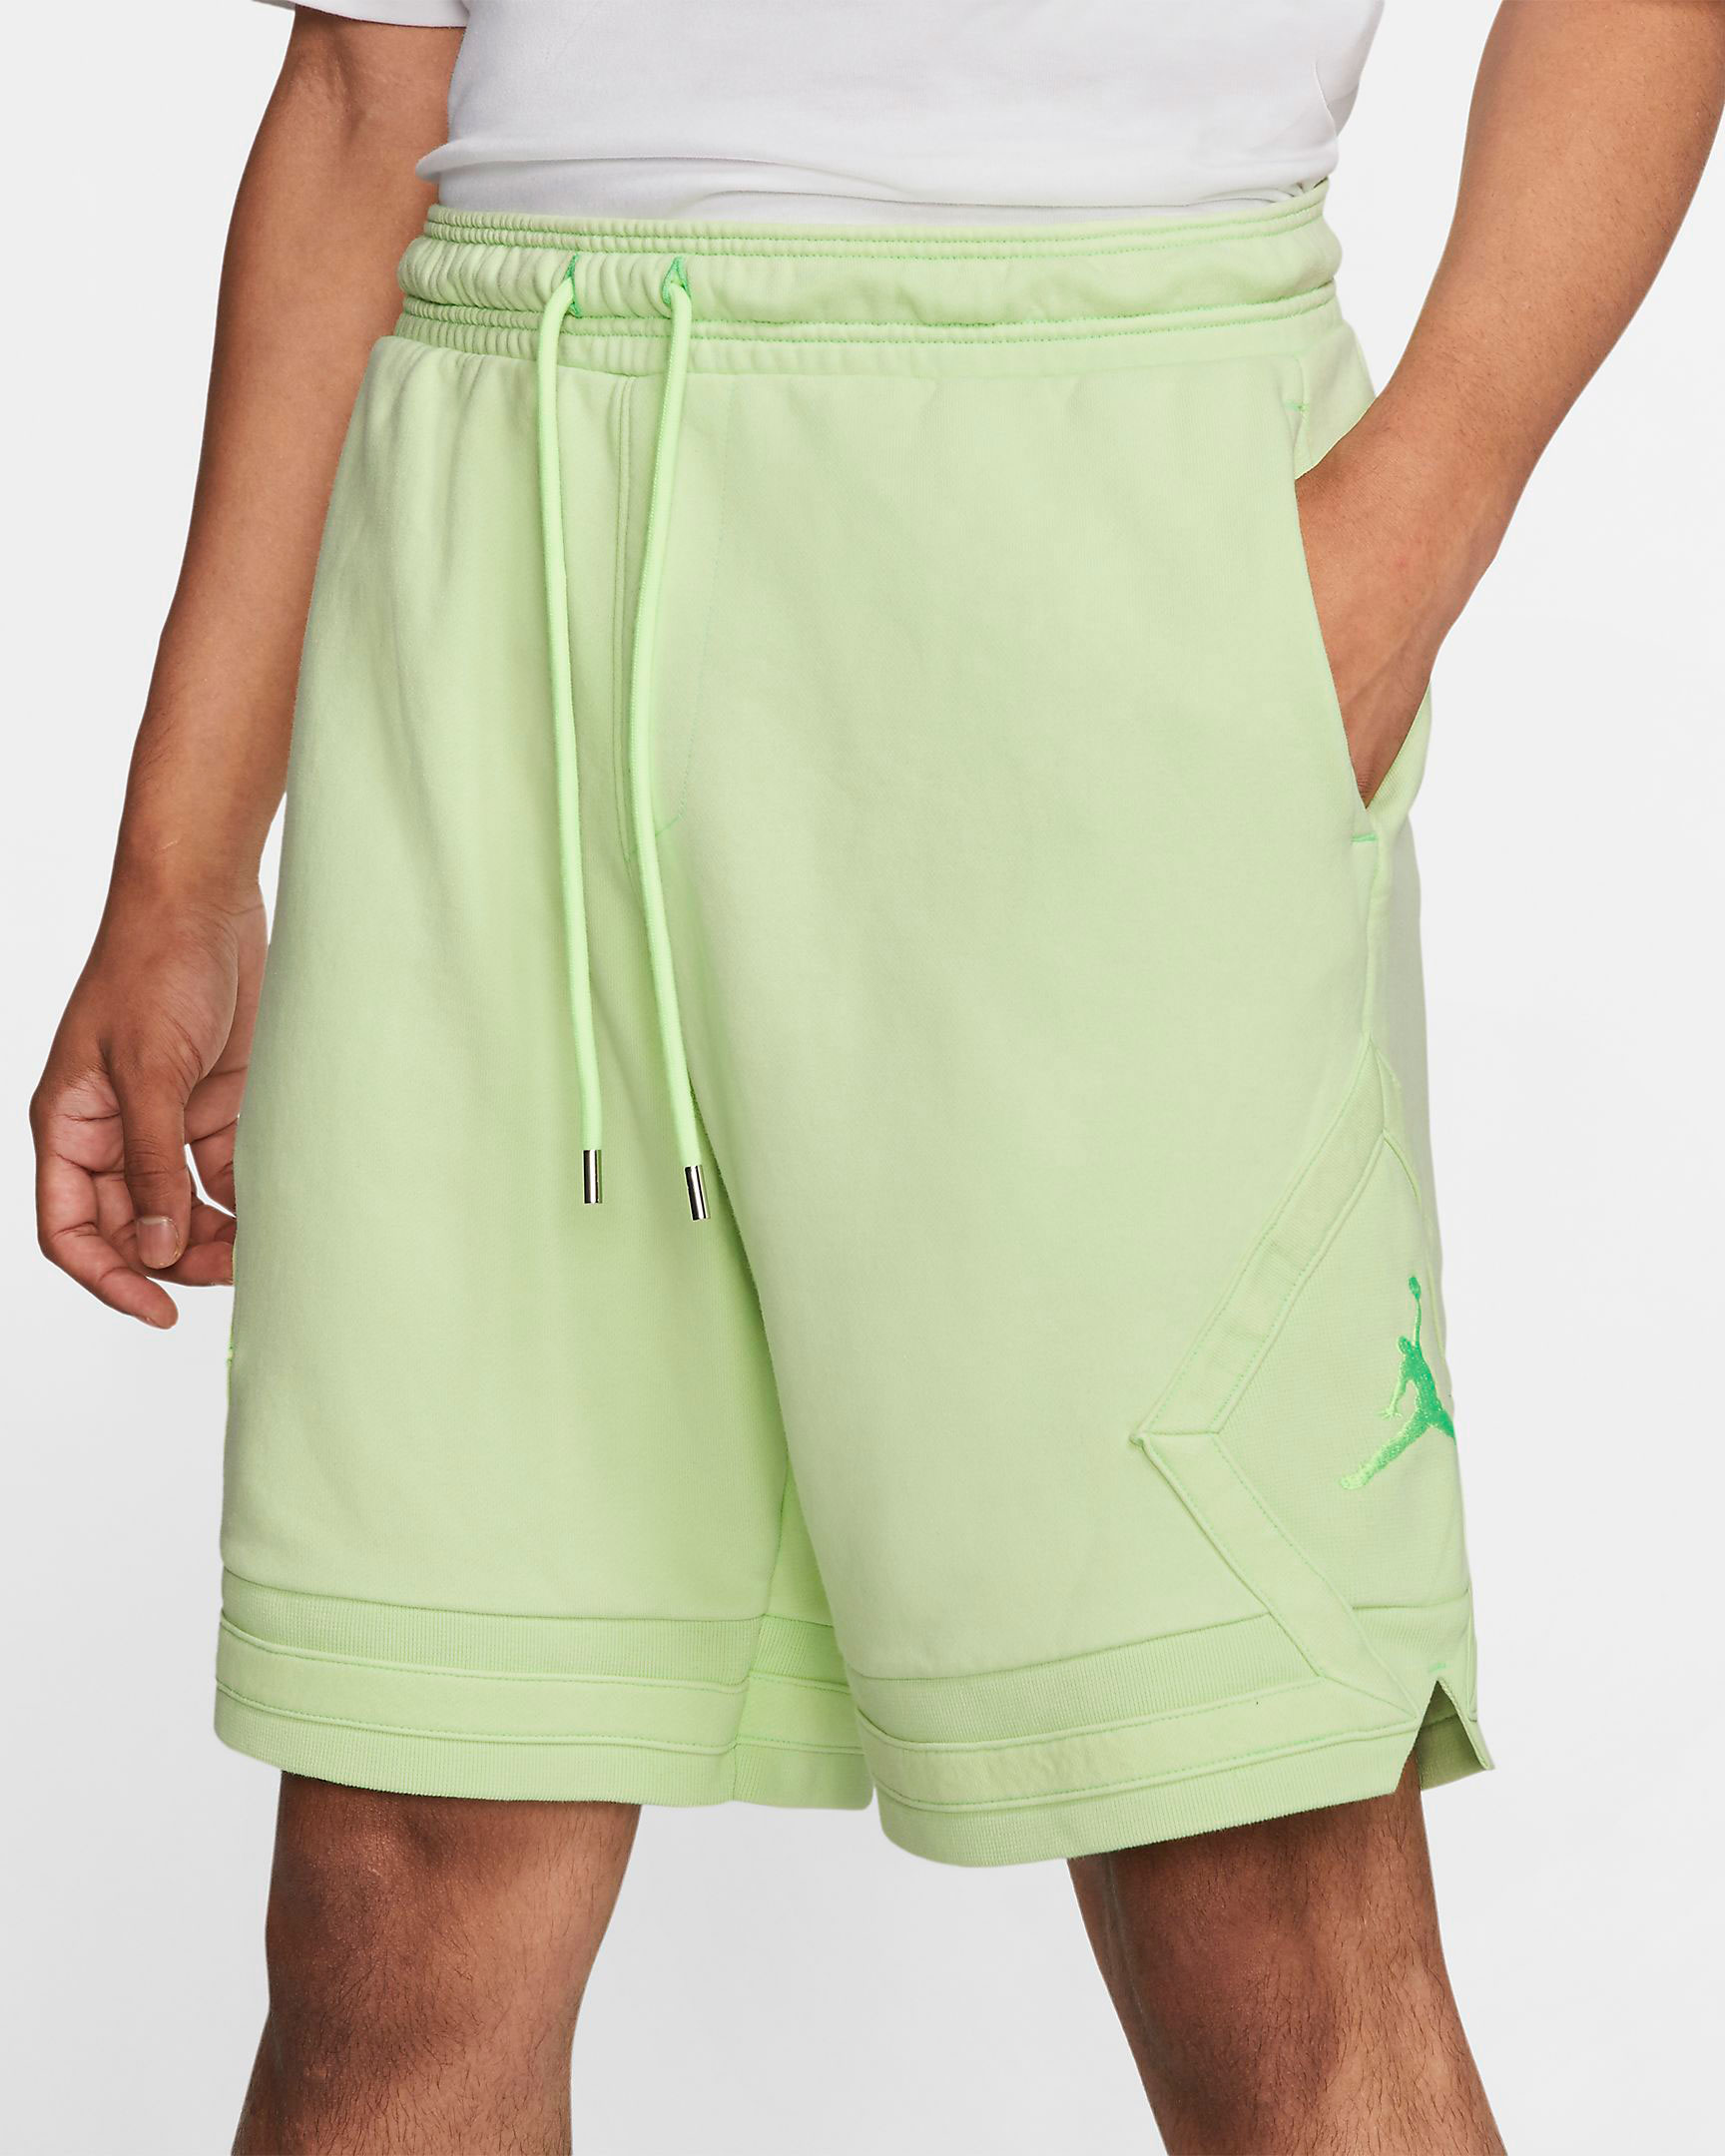 lime green jordan shorts